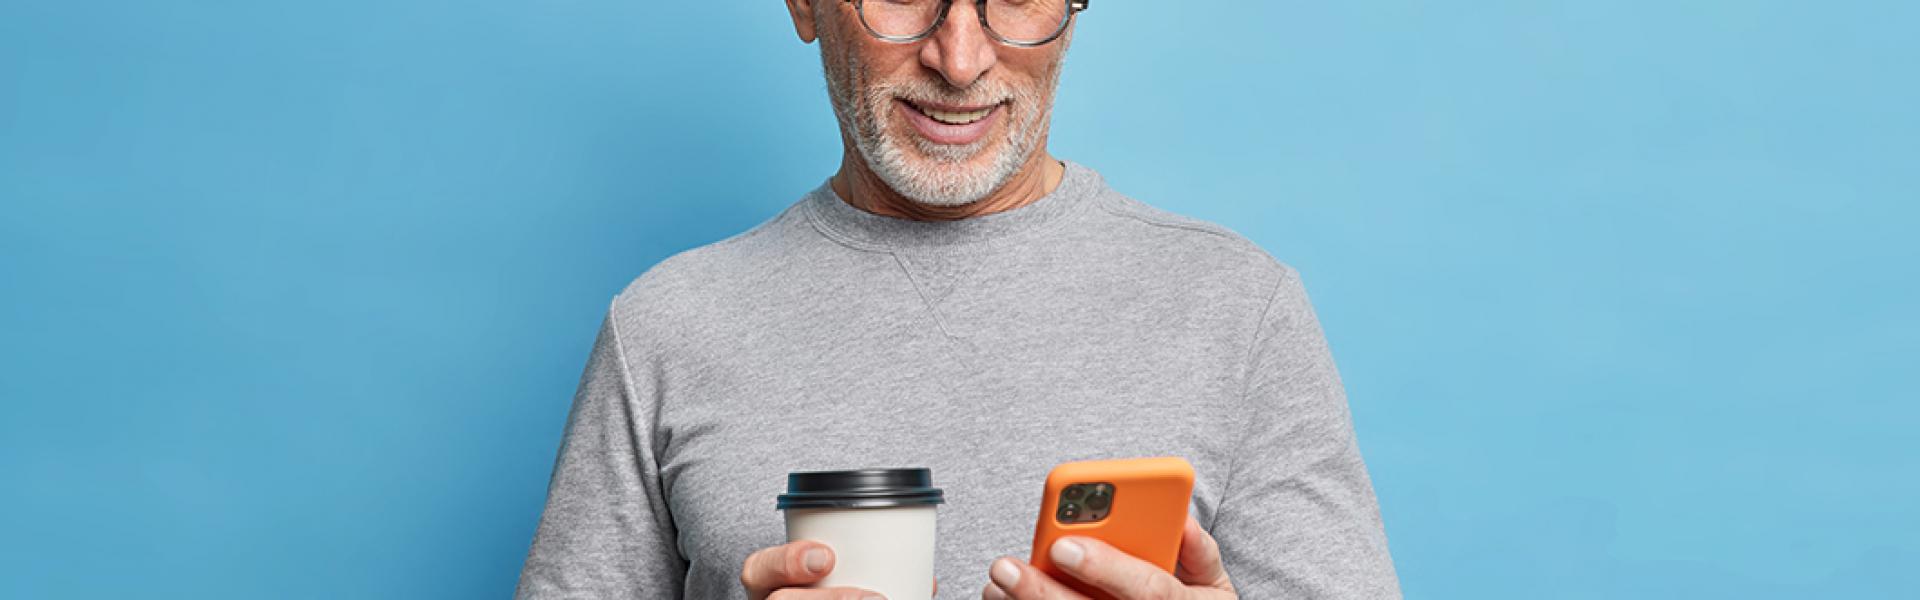 Man with coffee on phone